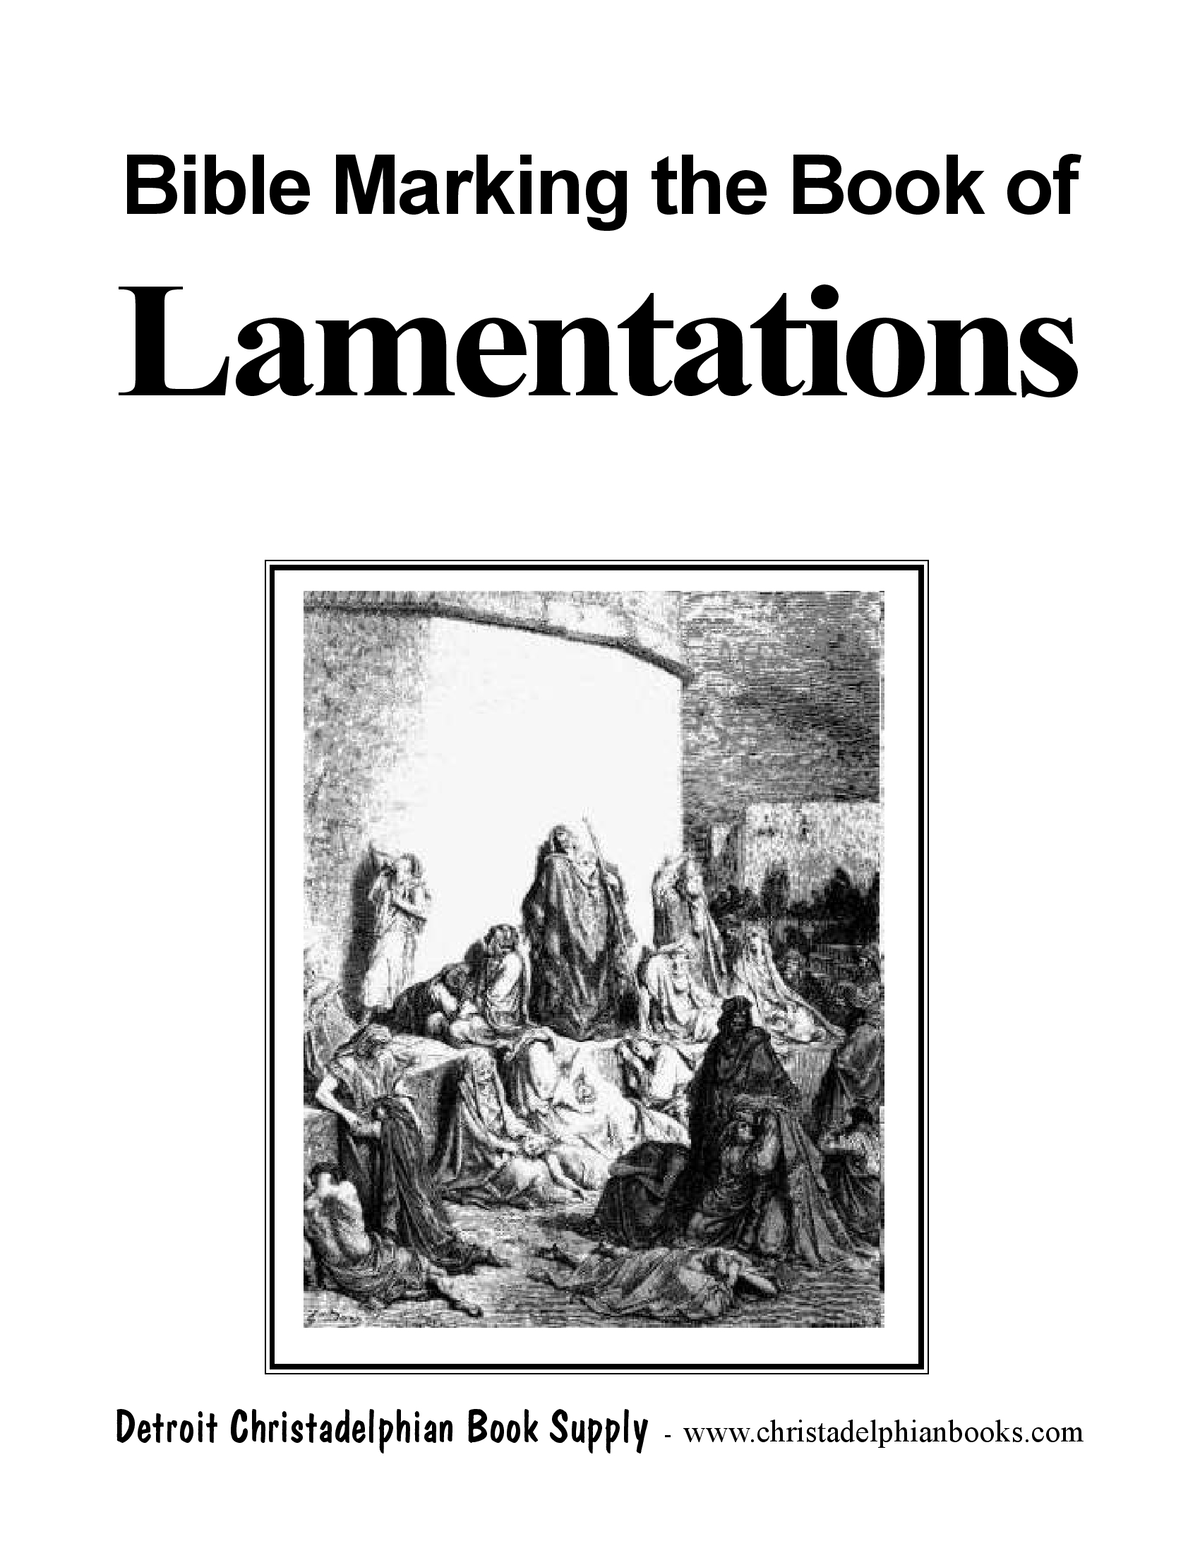 Lamentations - Bible Making